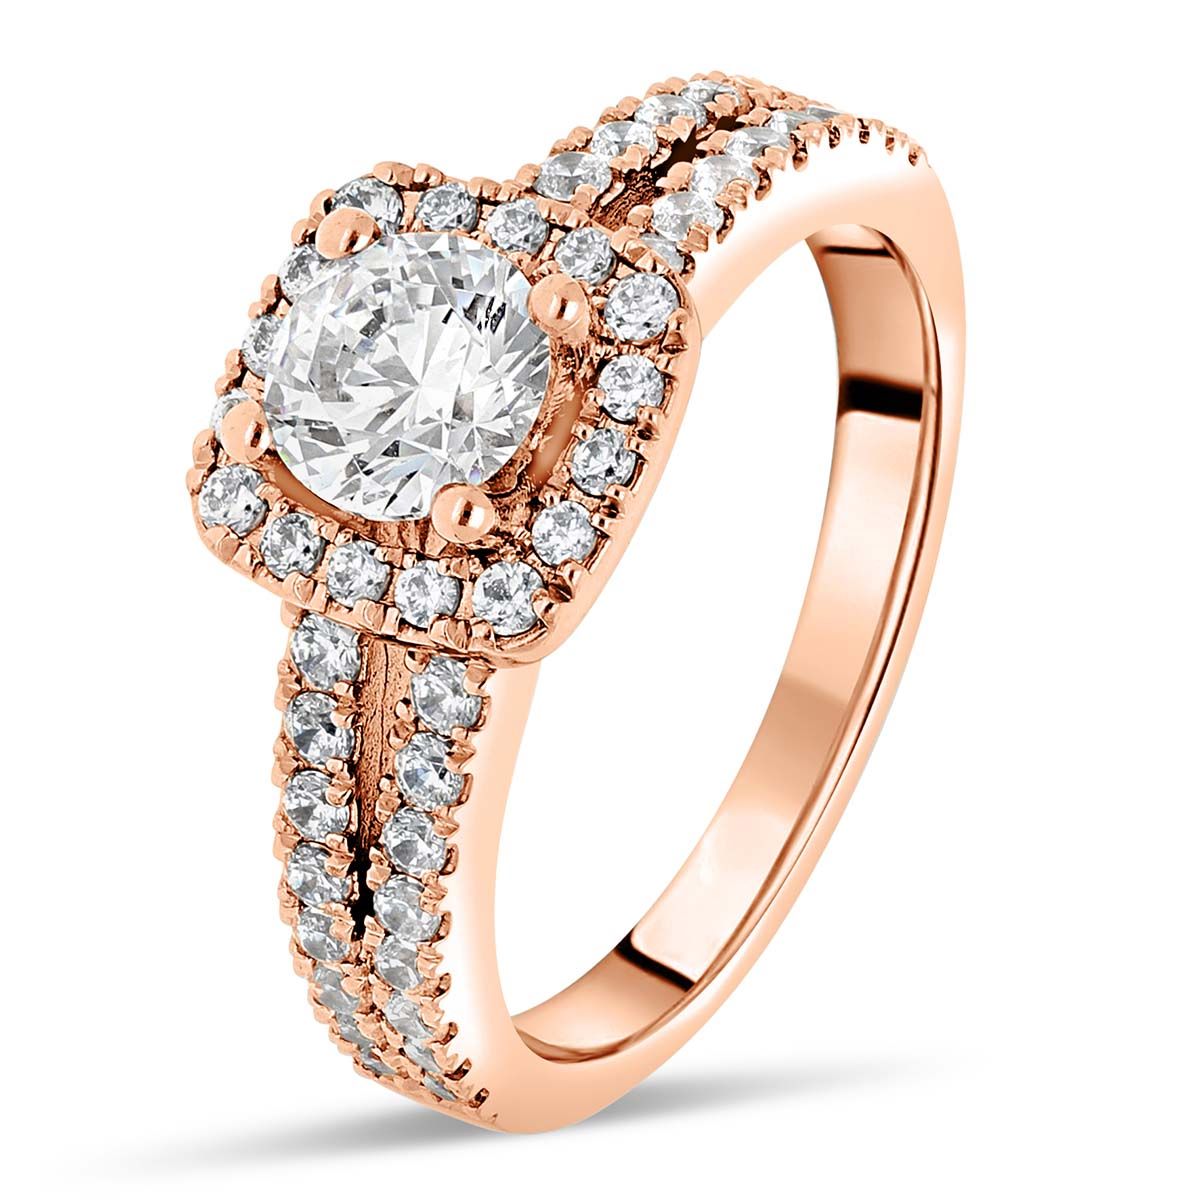 rhodes-r-solitaires-diamants-certifies-entourage-or-rose-750-